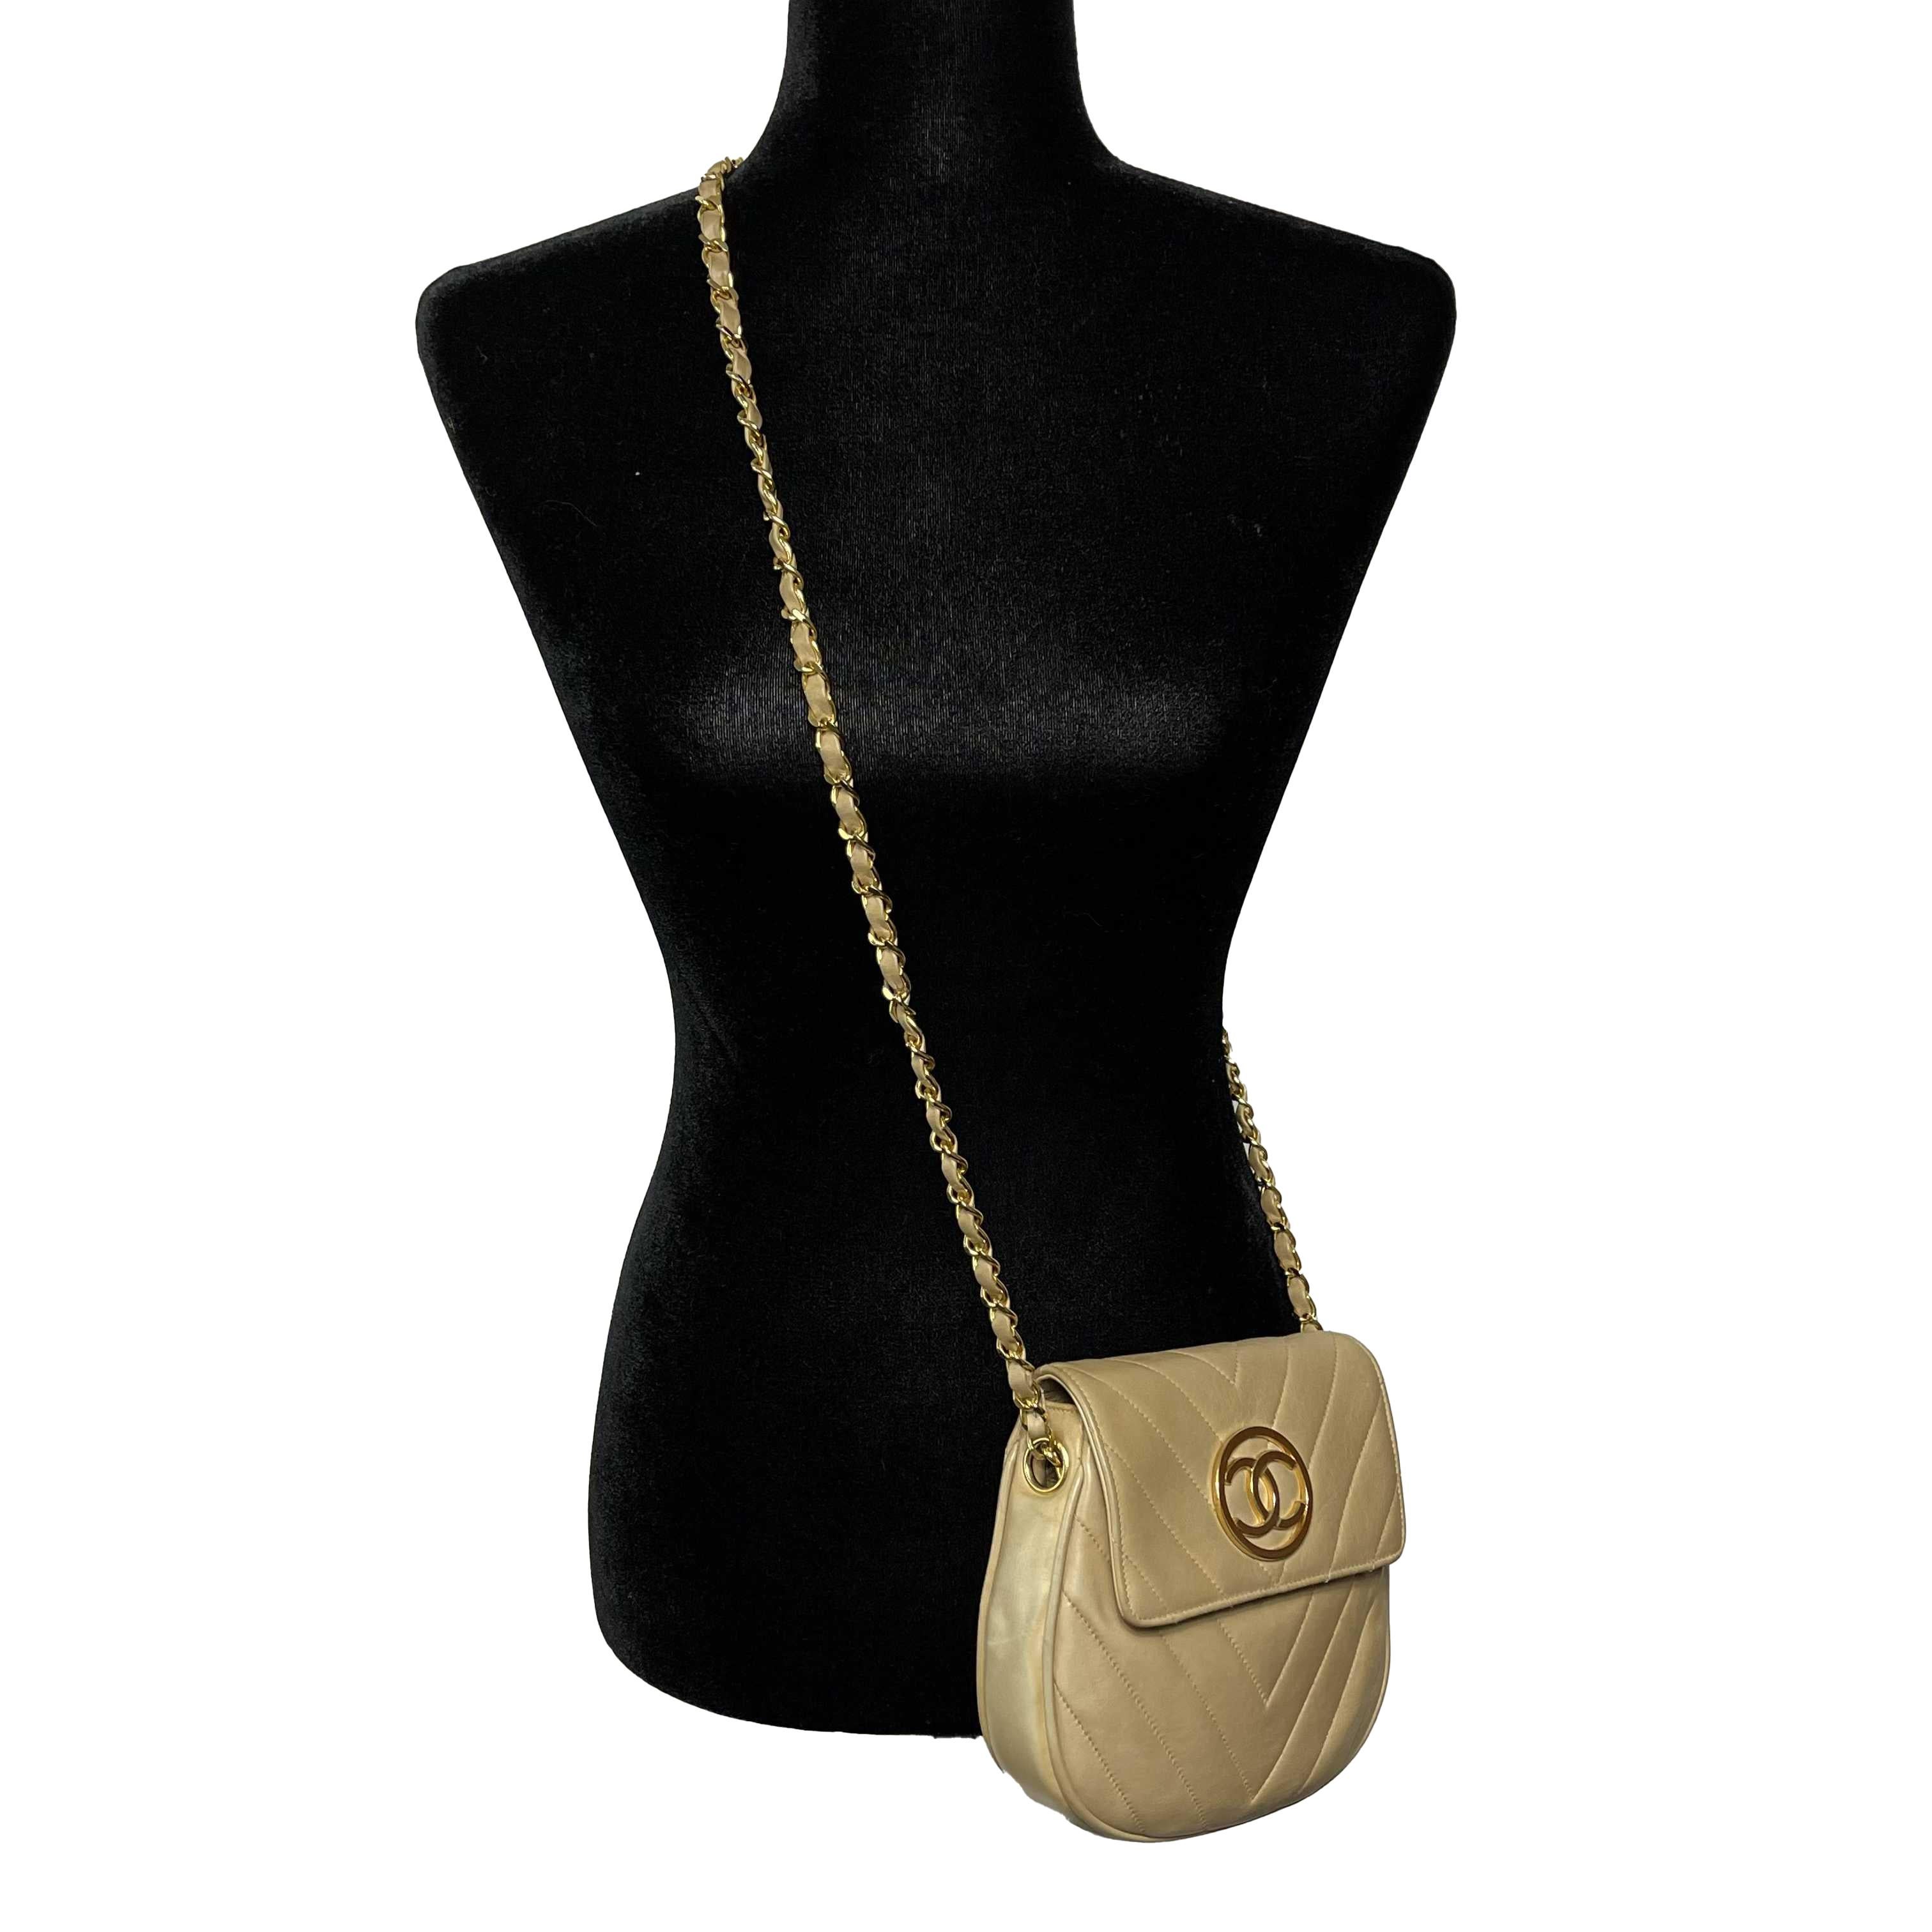 Chanel - Excellent - 90's Vintage Chevron Flap 24k - Beige, Gold - Handbag 7